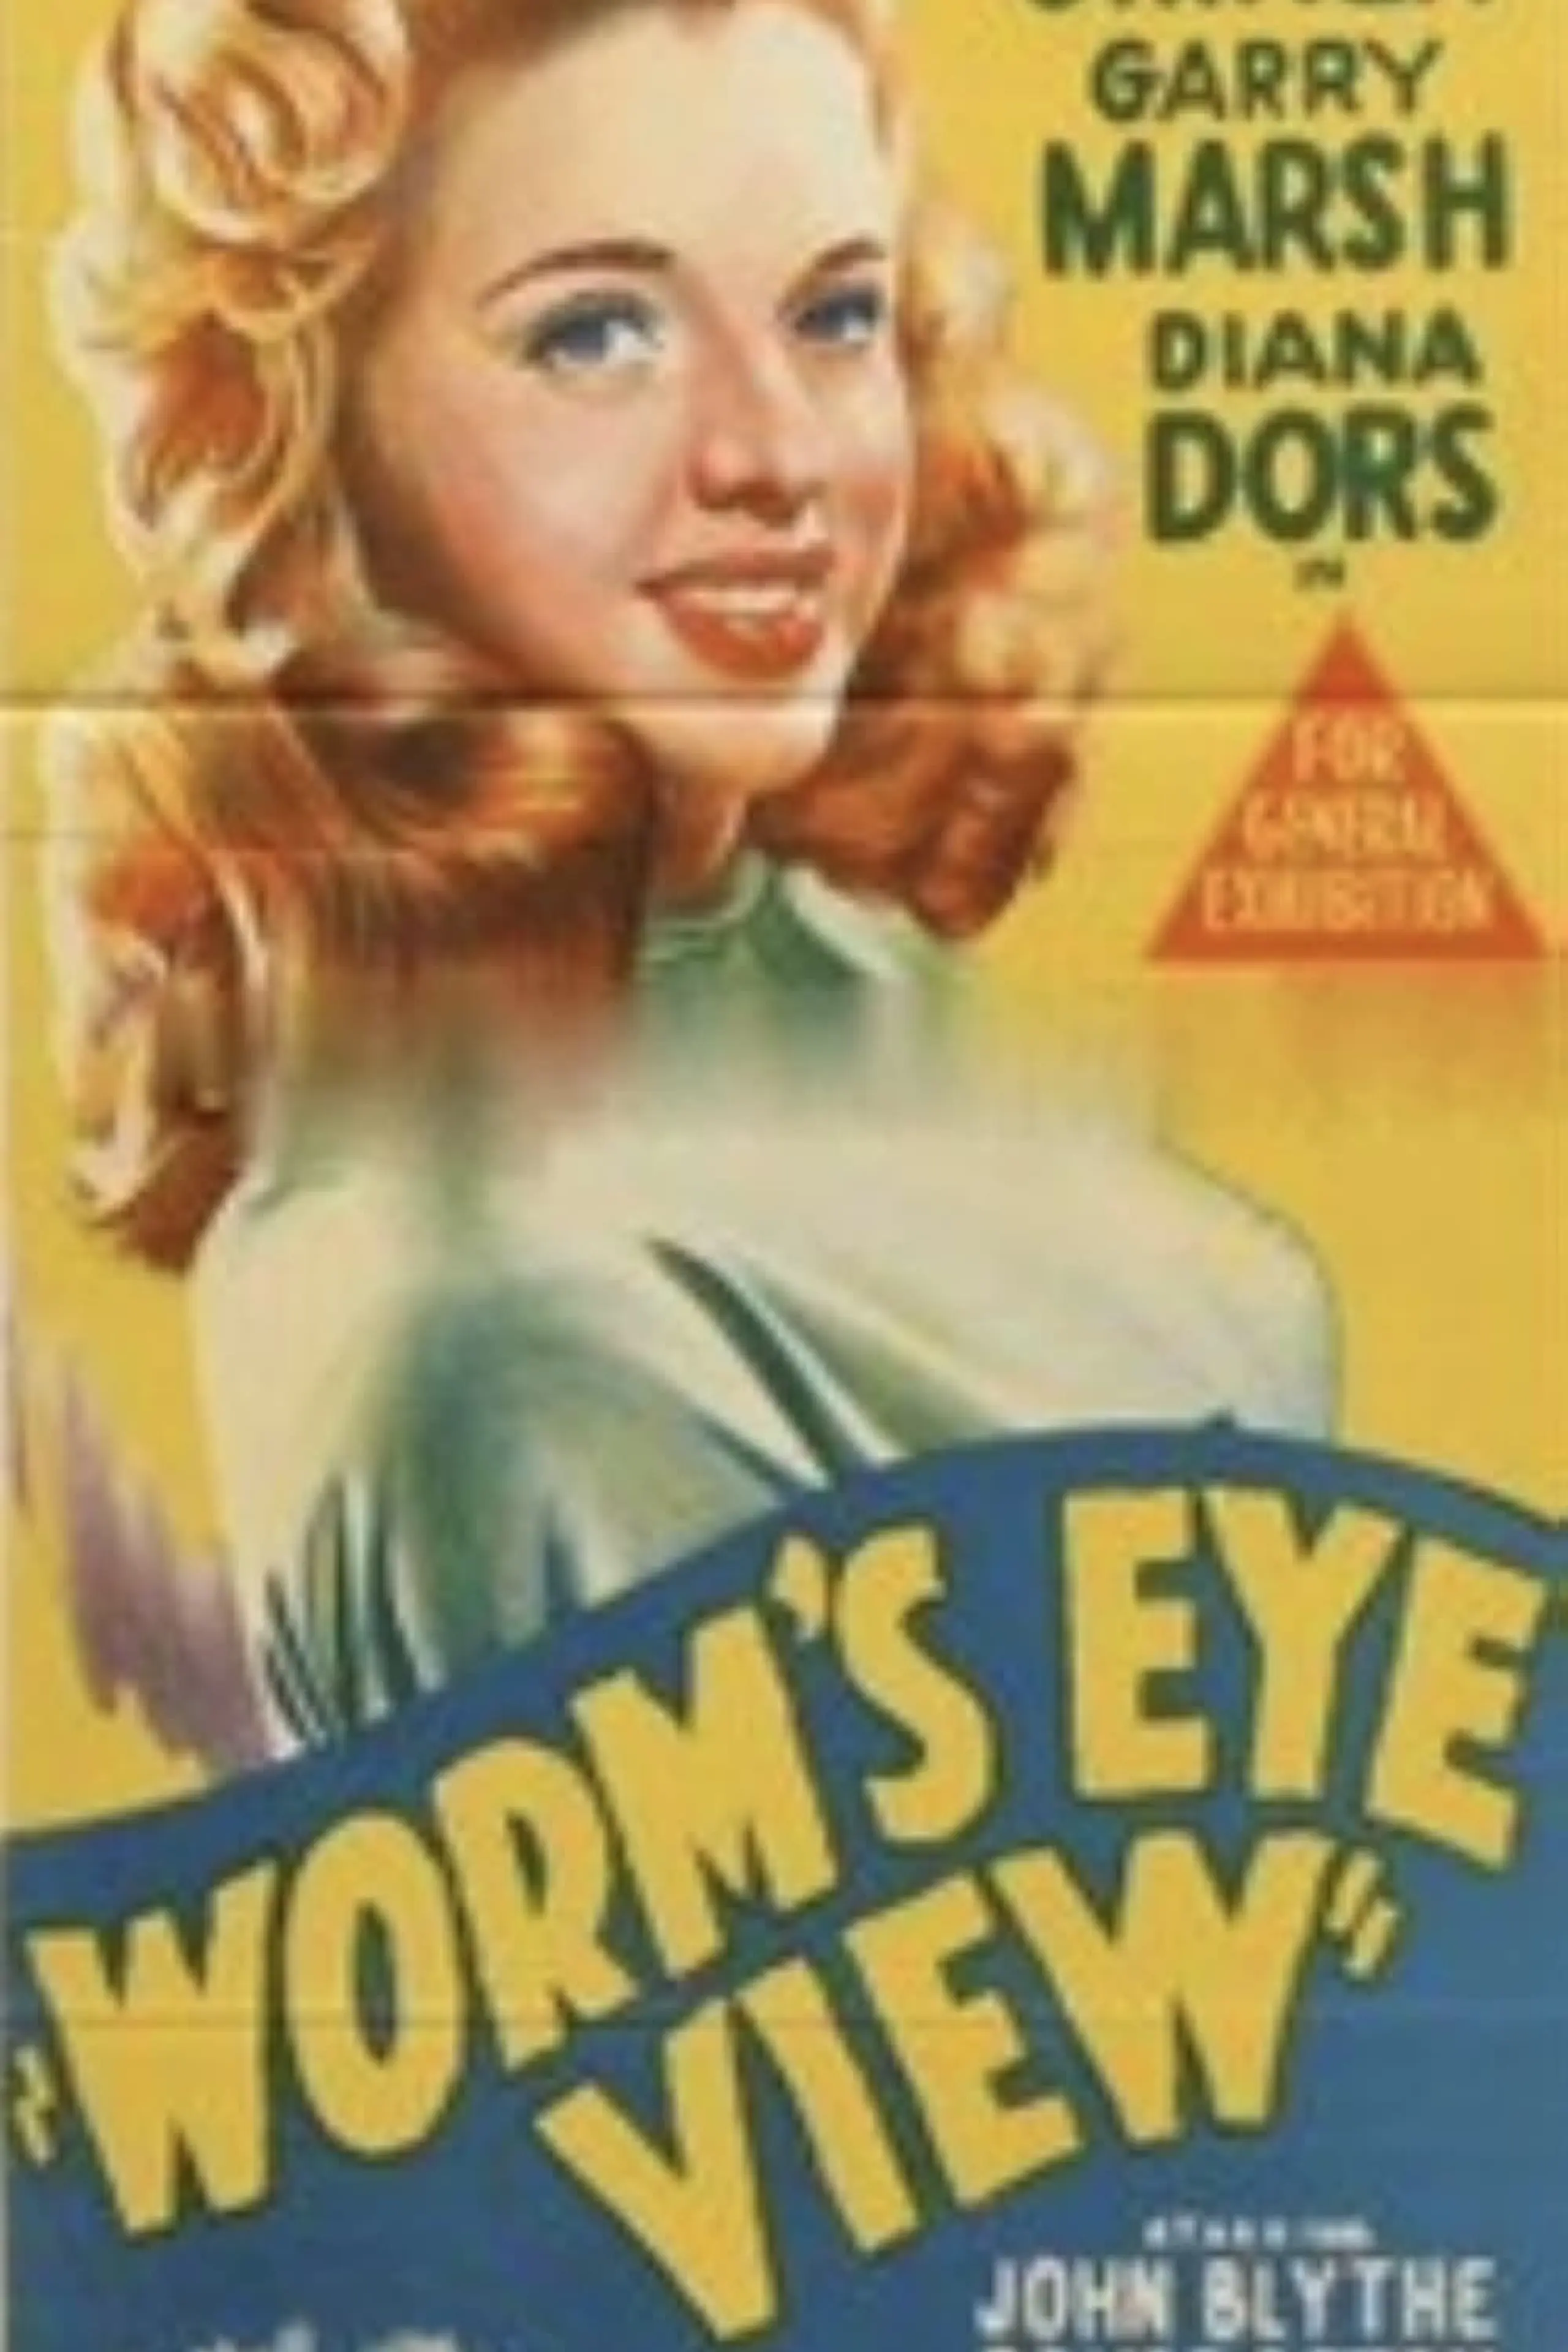 Worm's Eye View